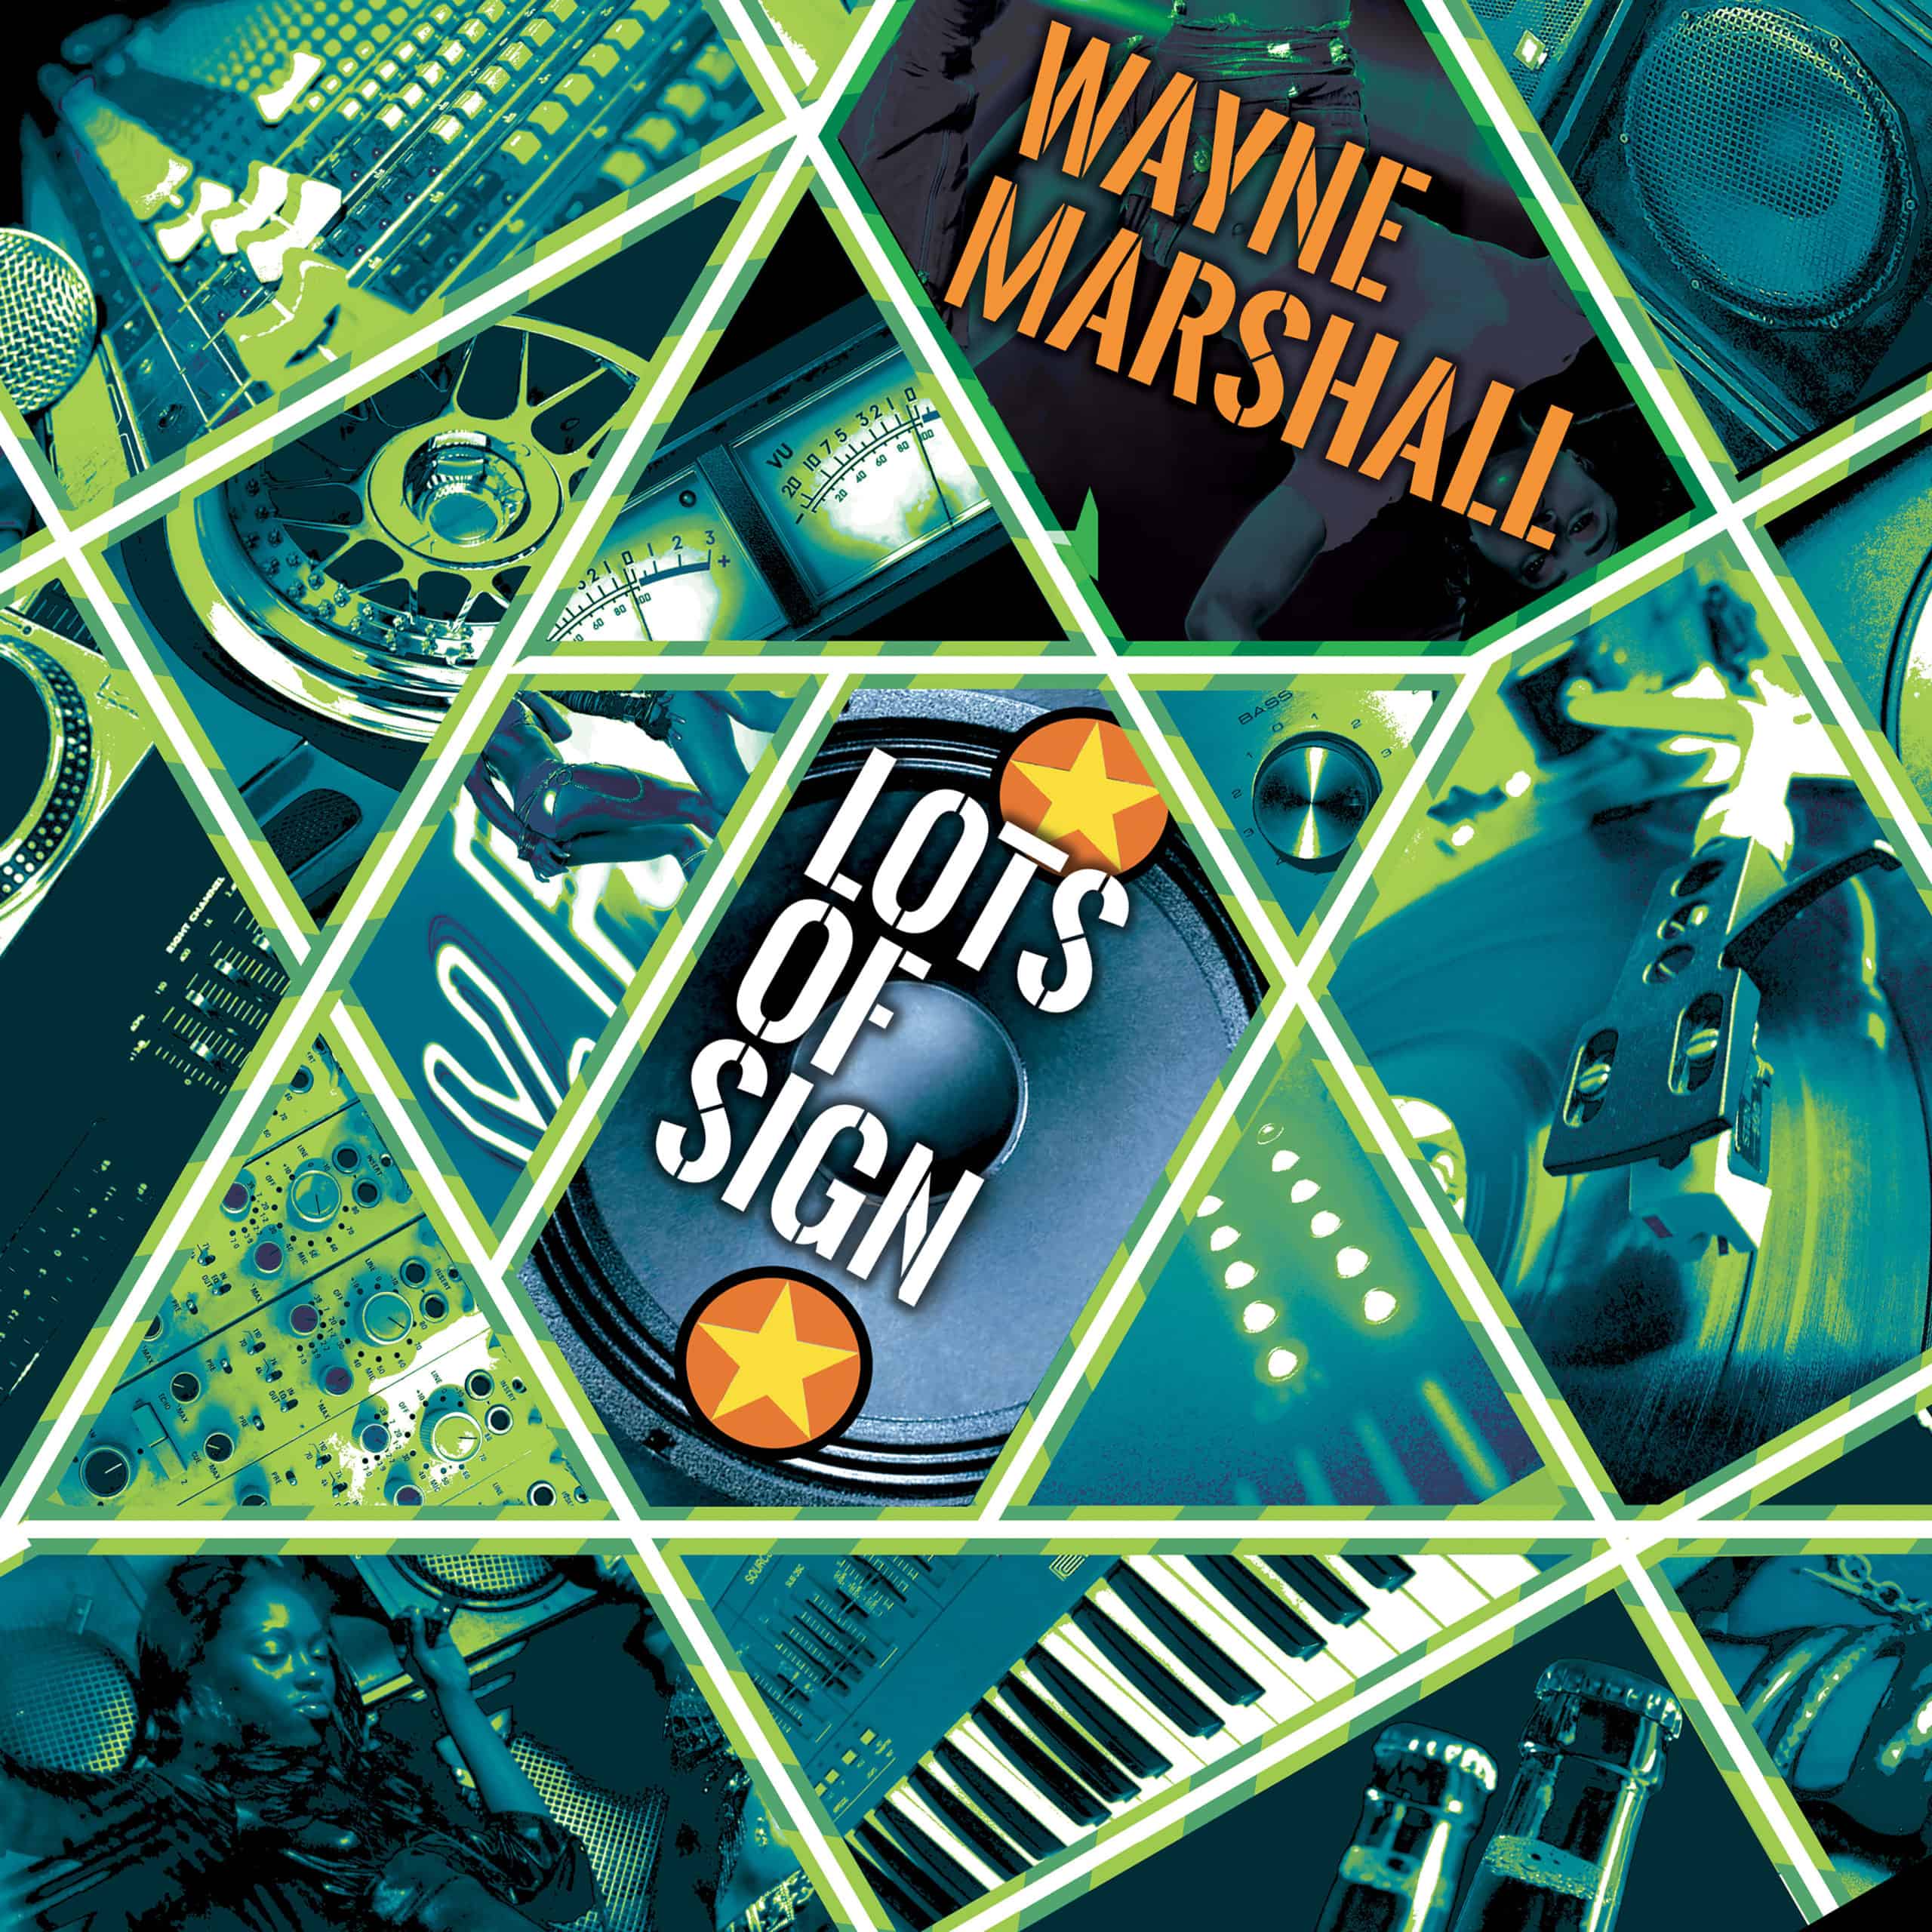 Wayne Marshall - Lots of Sign - Dancehall Anthems 2020